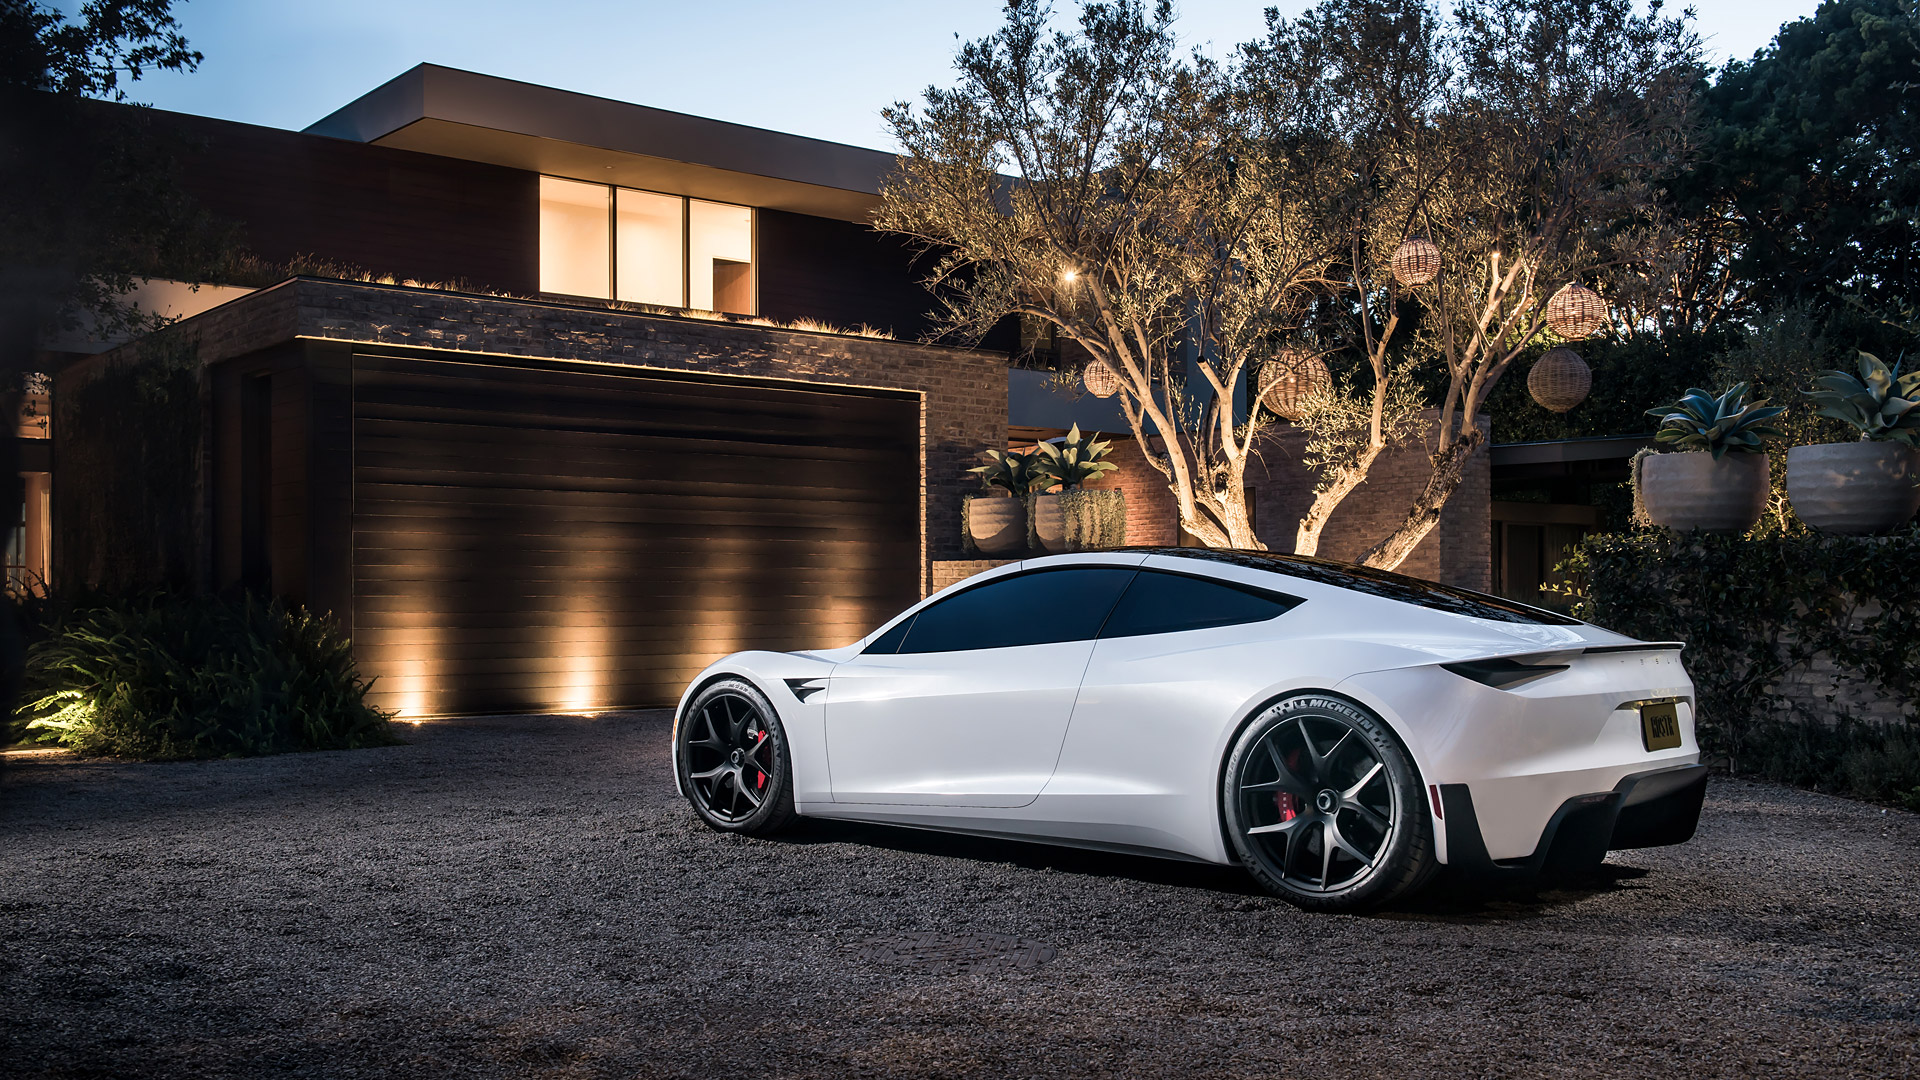  2020 Tesla Roadster Prototype Wallpaper.